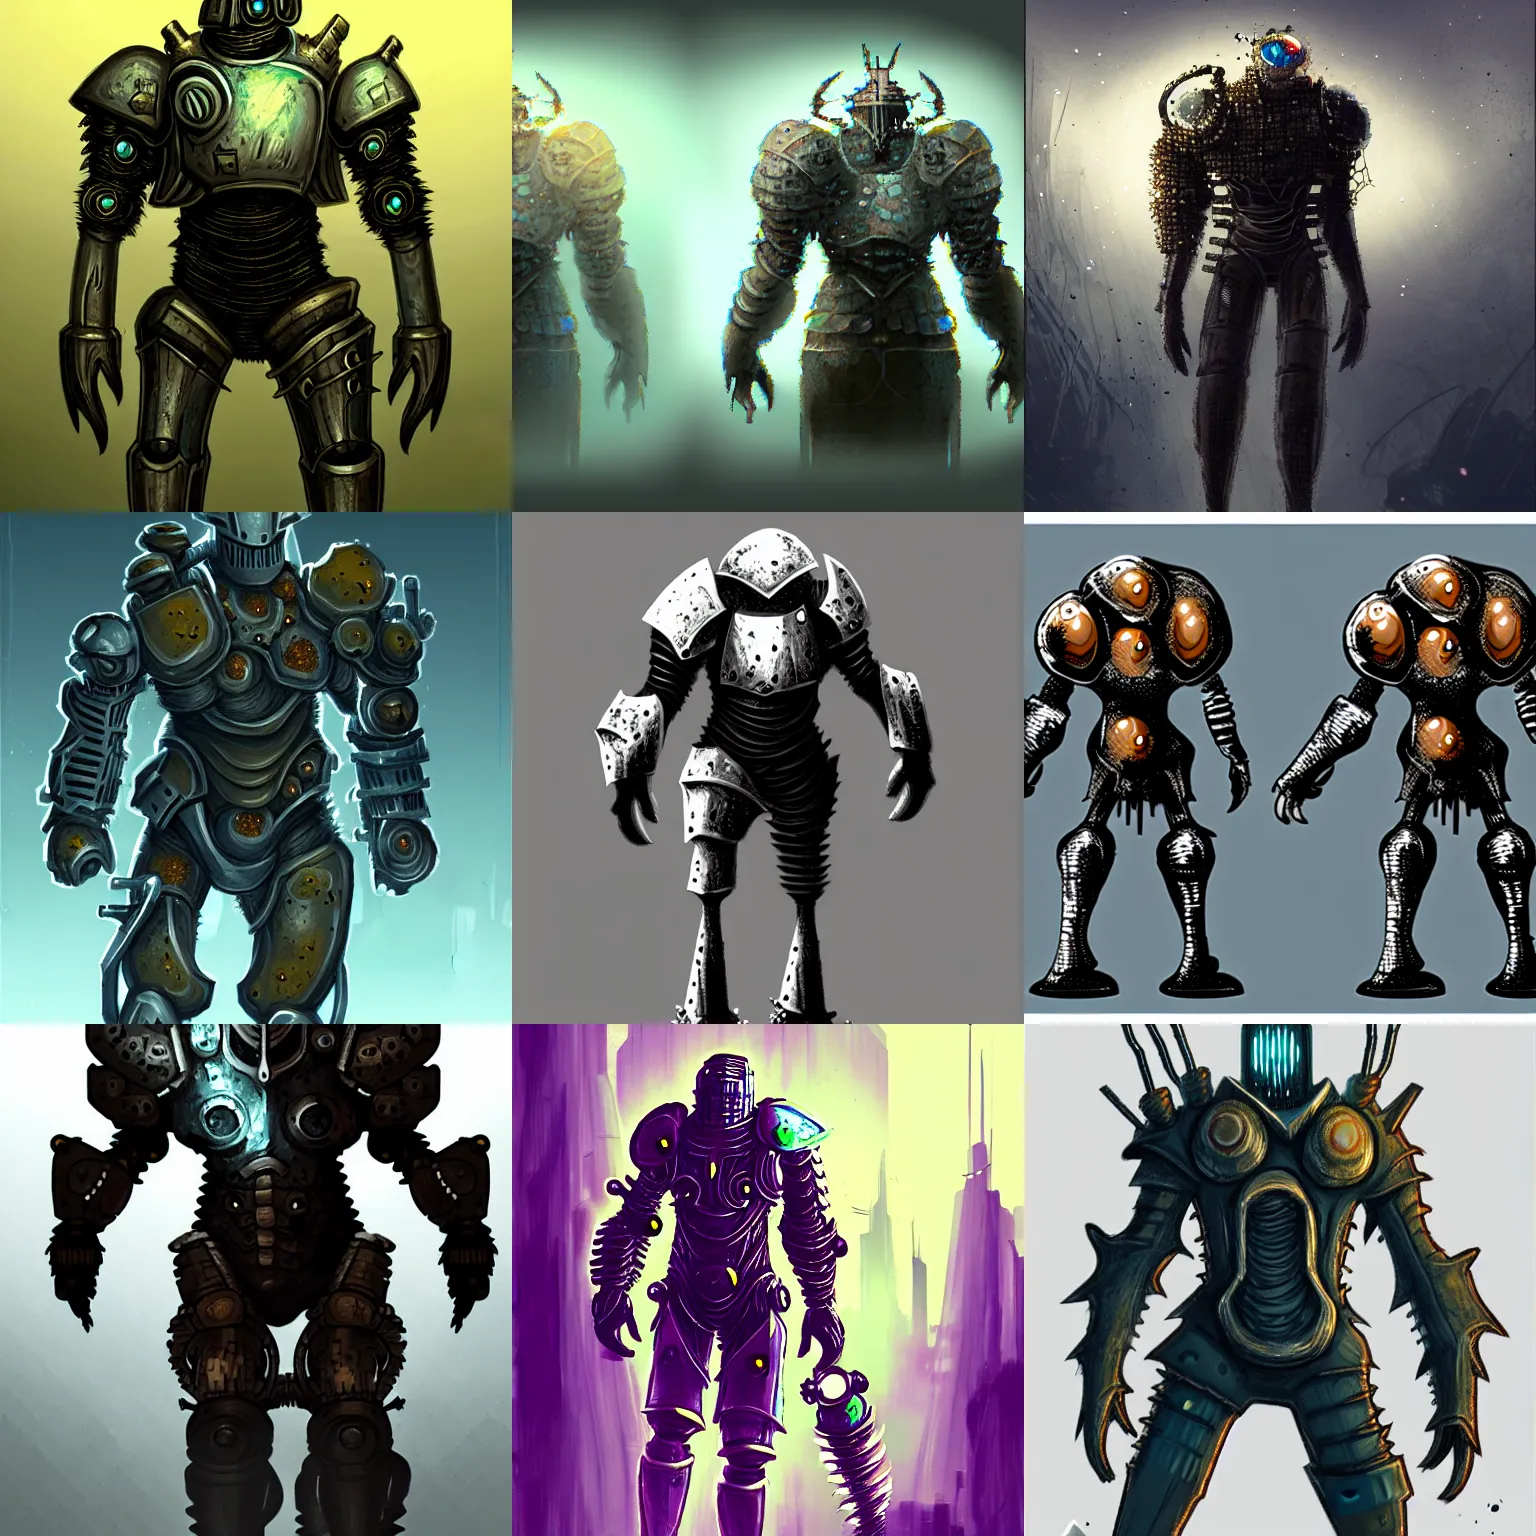 Prompt: Biopunk Knight, no text, concept art